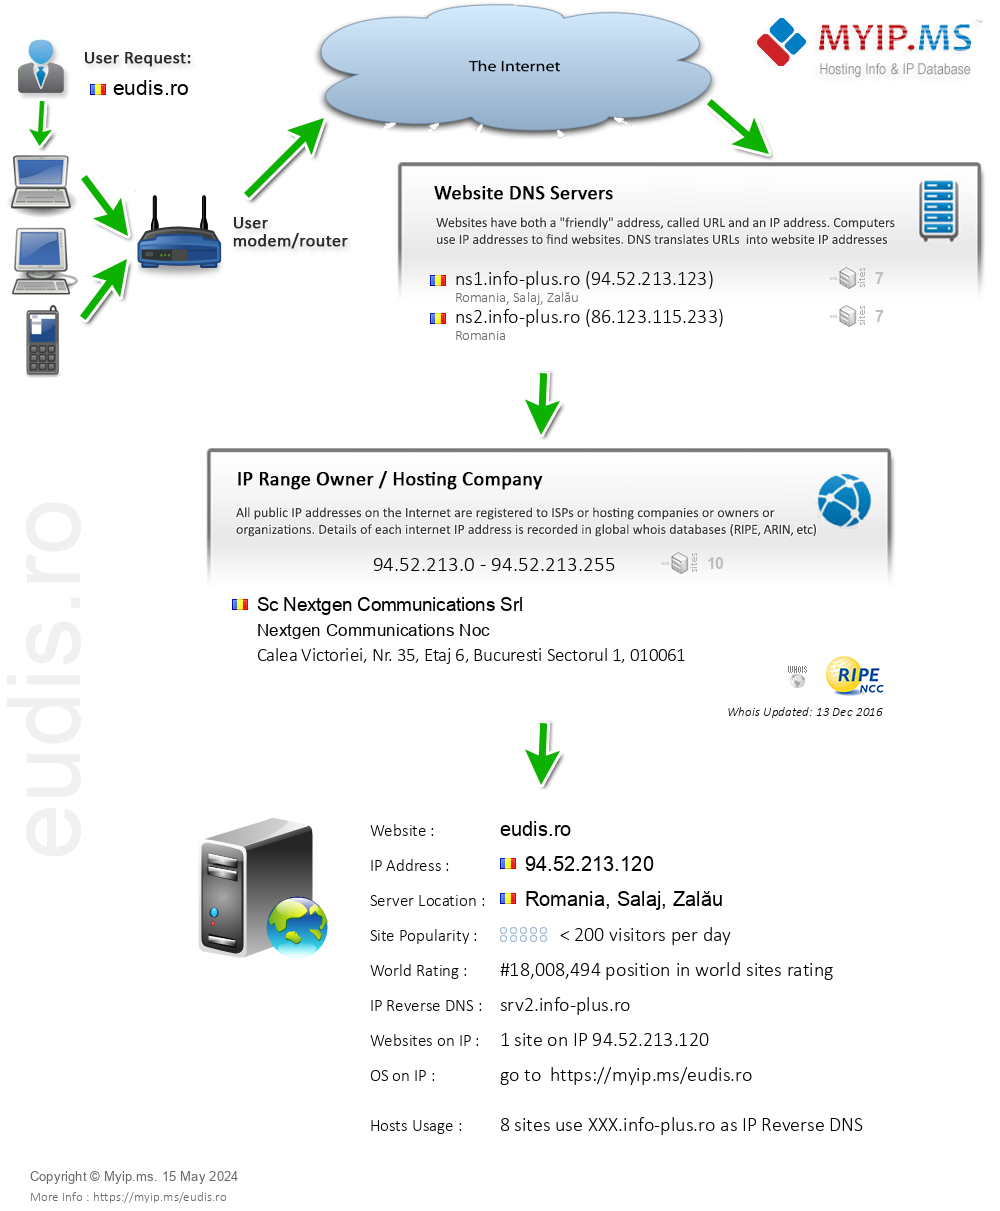 Eudis.ro - Website Hosting Visual IP Diagram